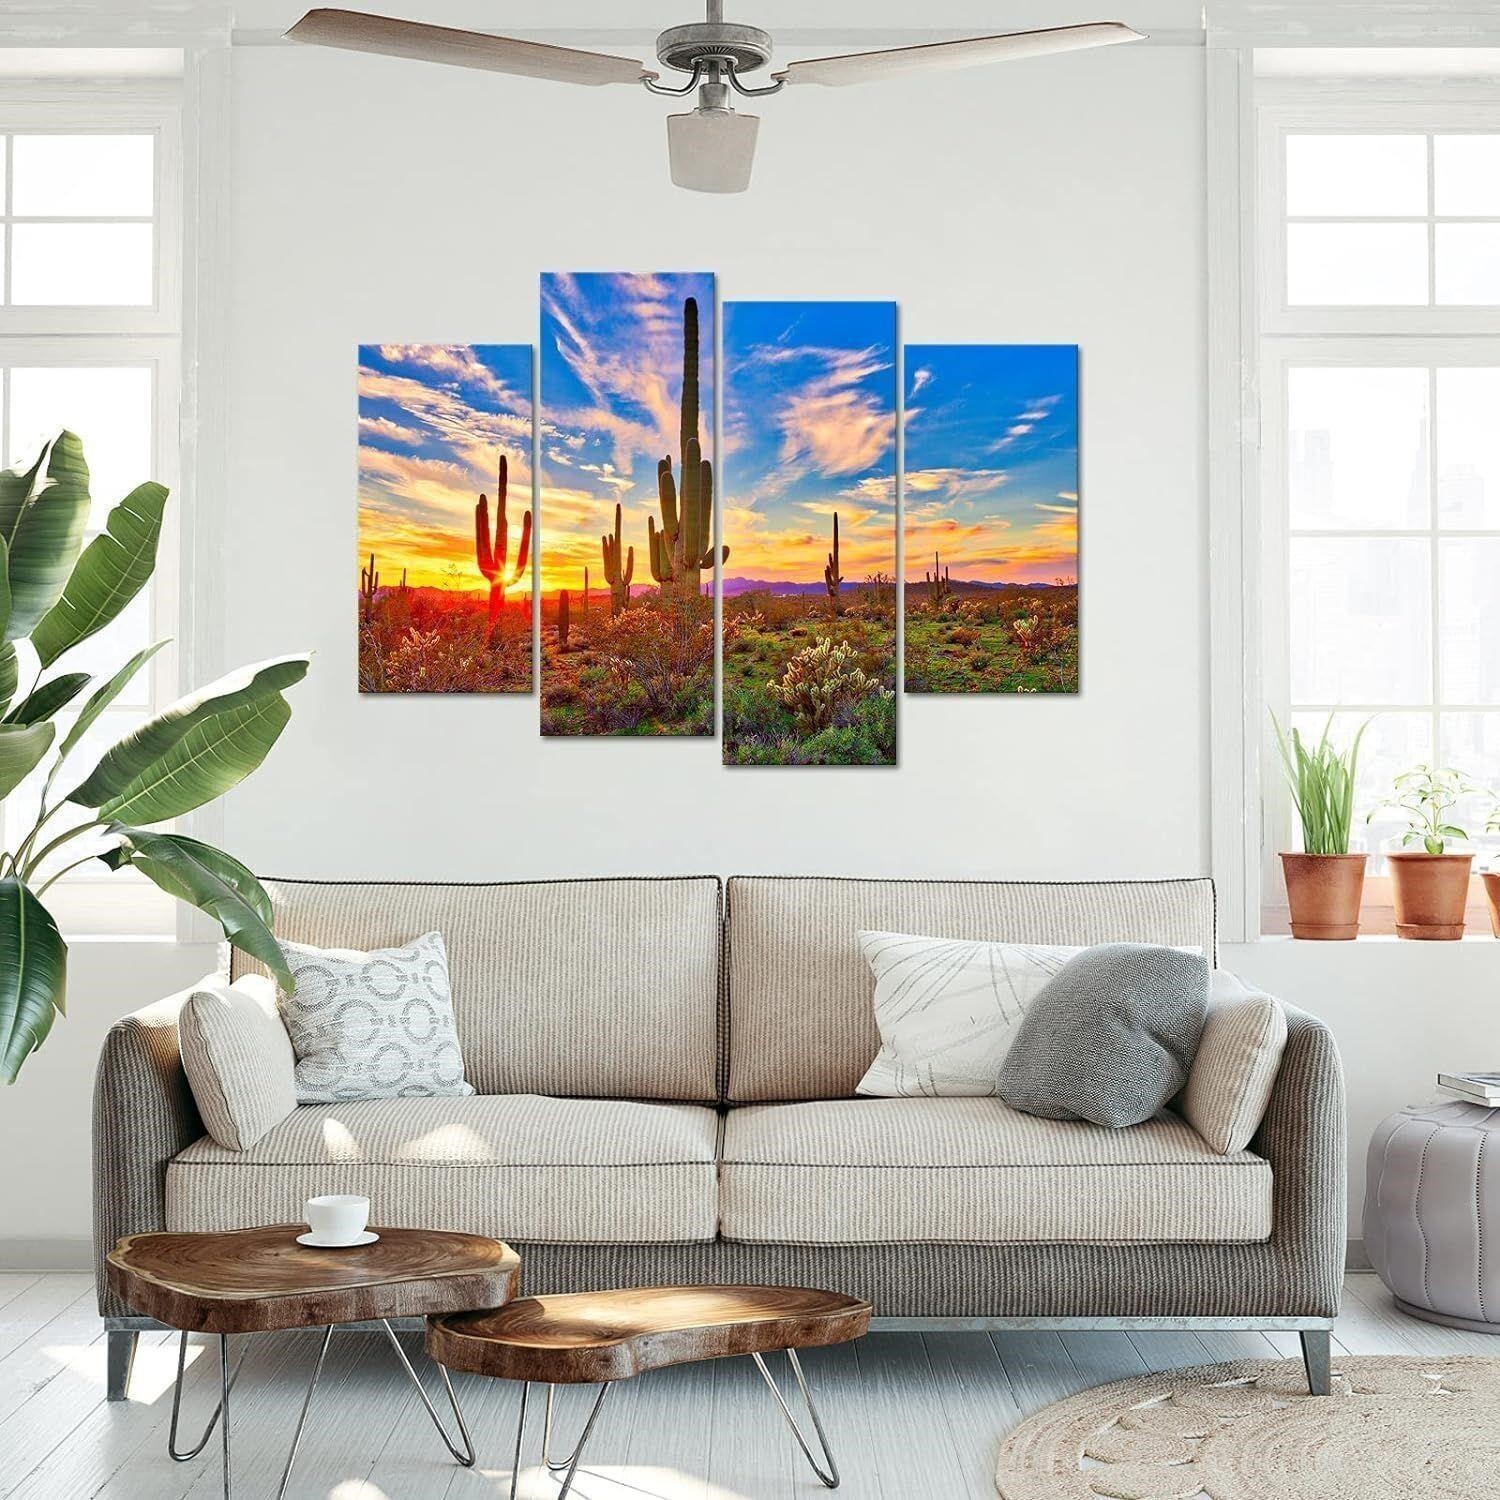 4 Panel Cactus Arizona Desert Canvas Wall Art $60